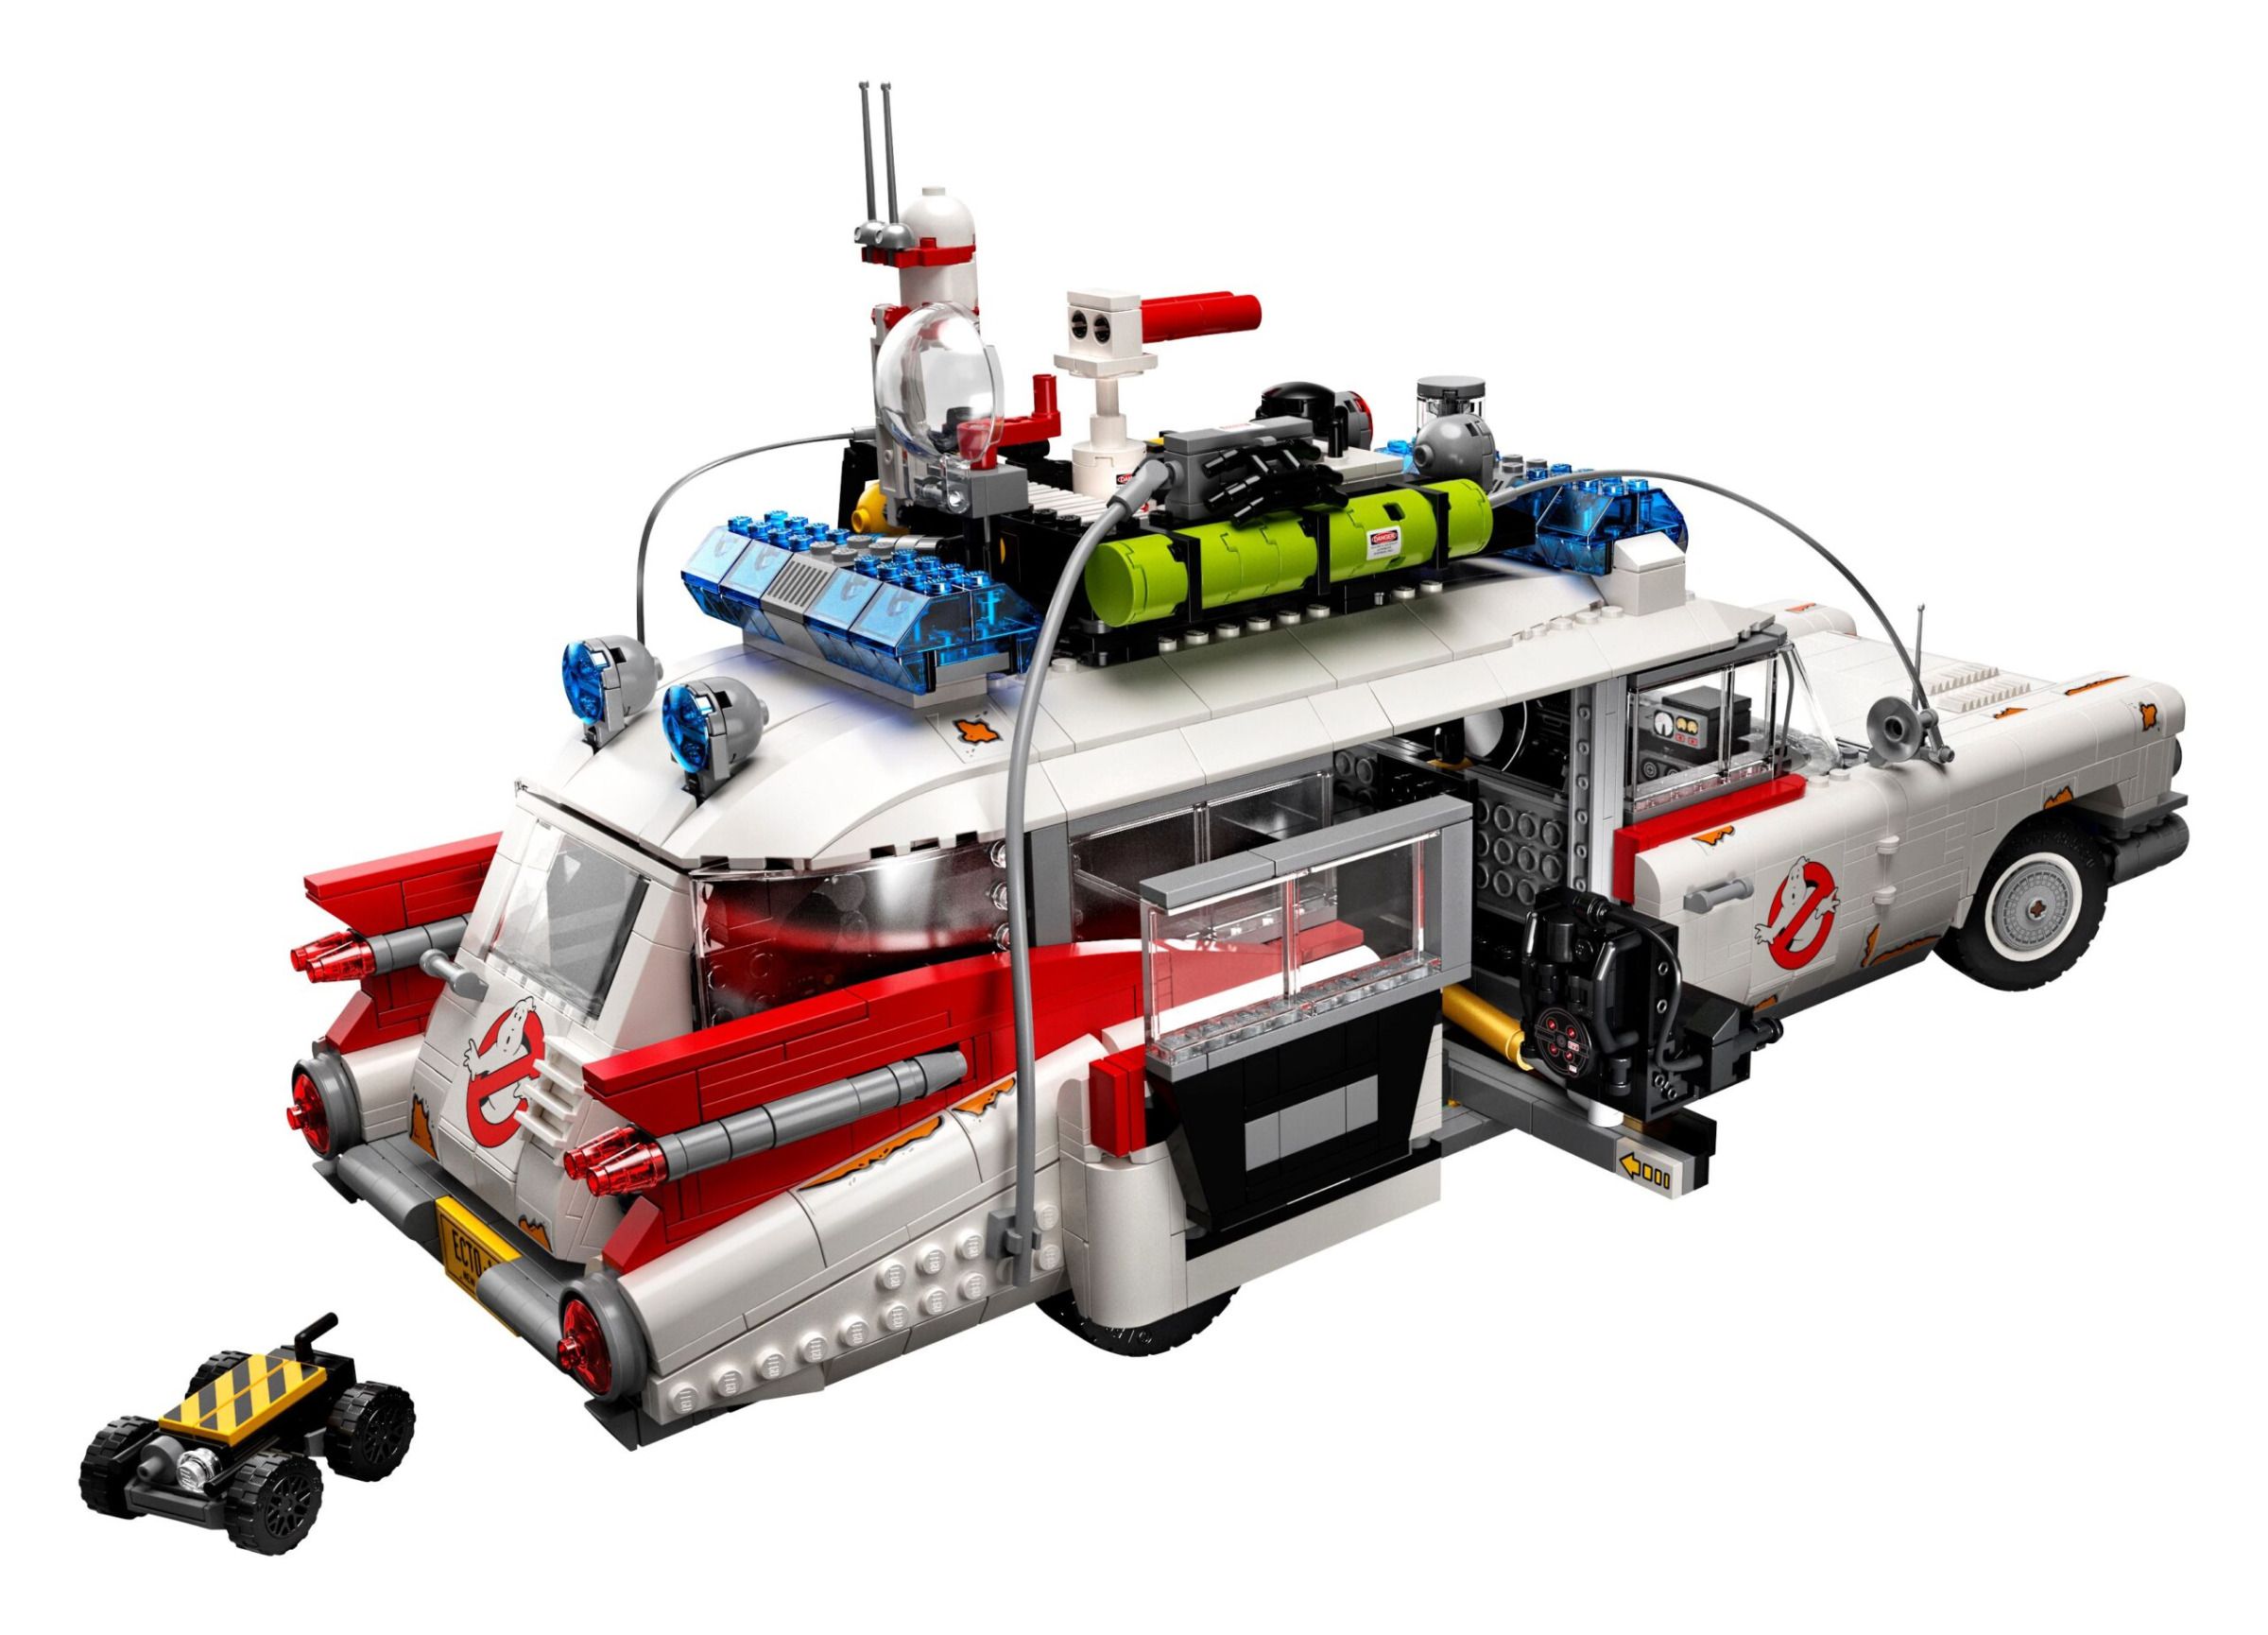 LEGO 10274 Creator Ghostbusters ECTO-1